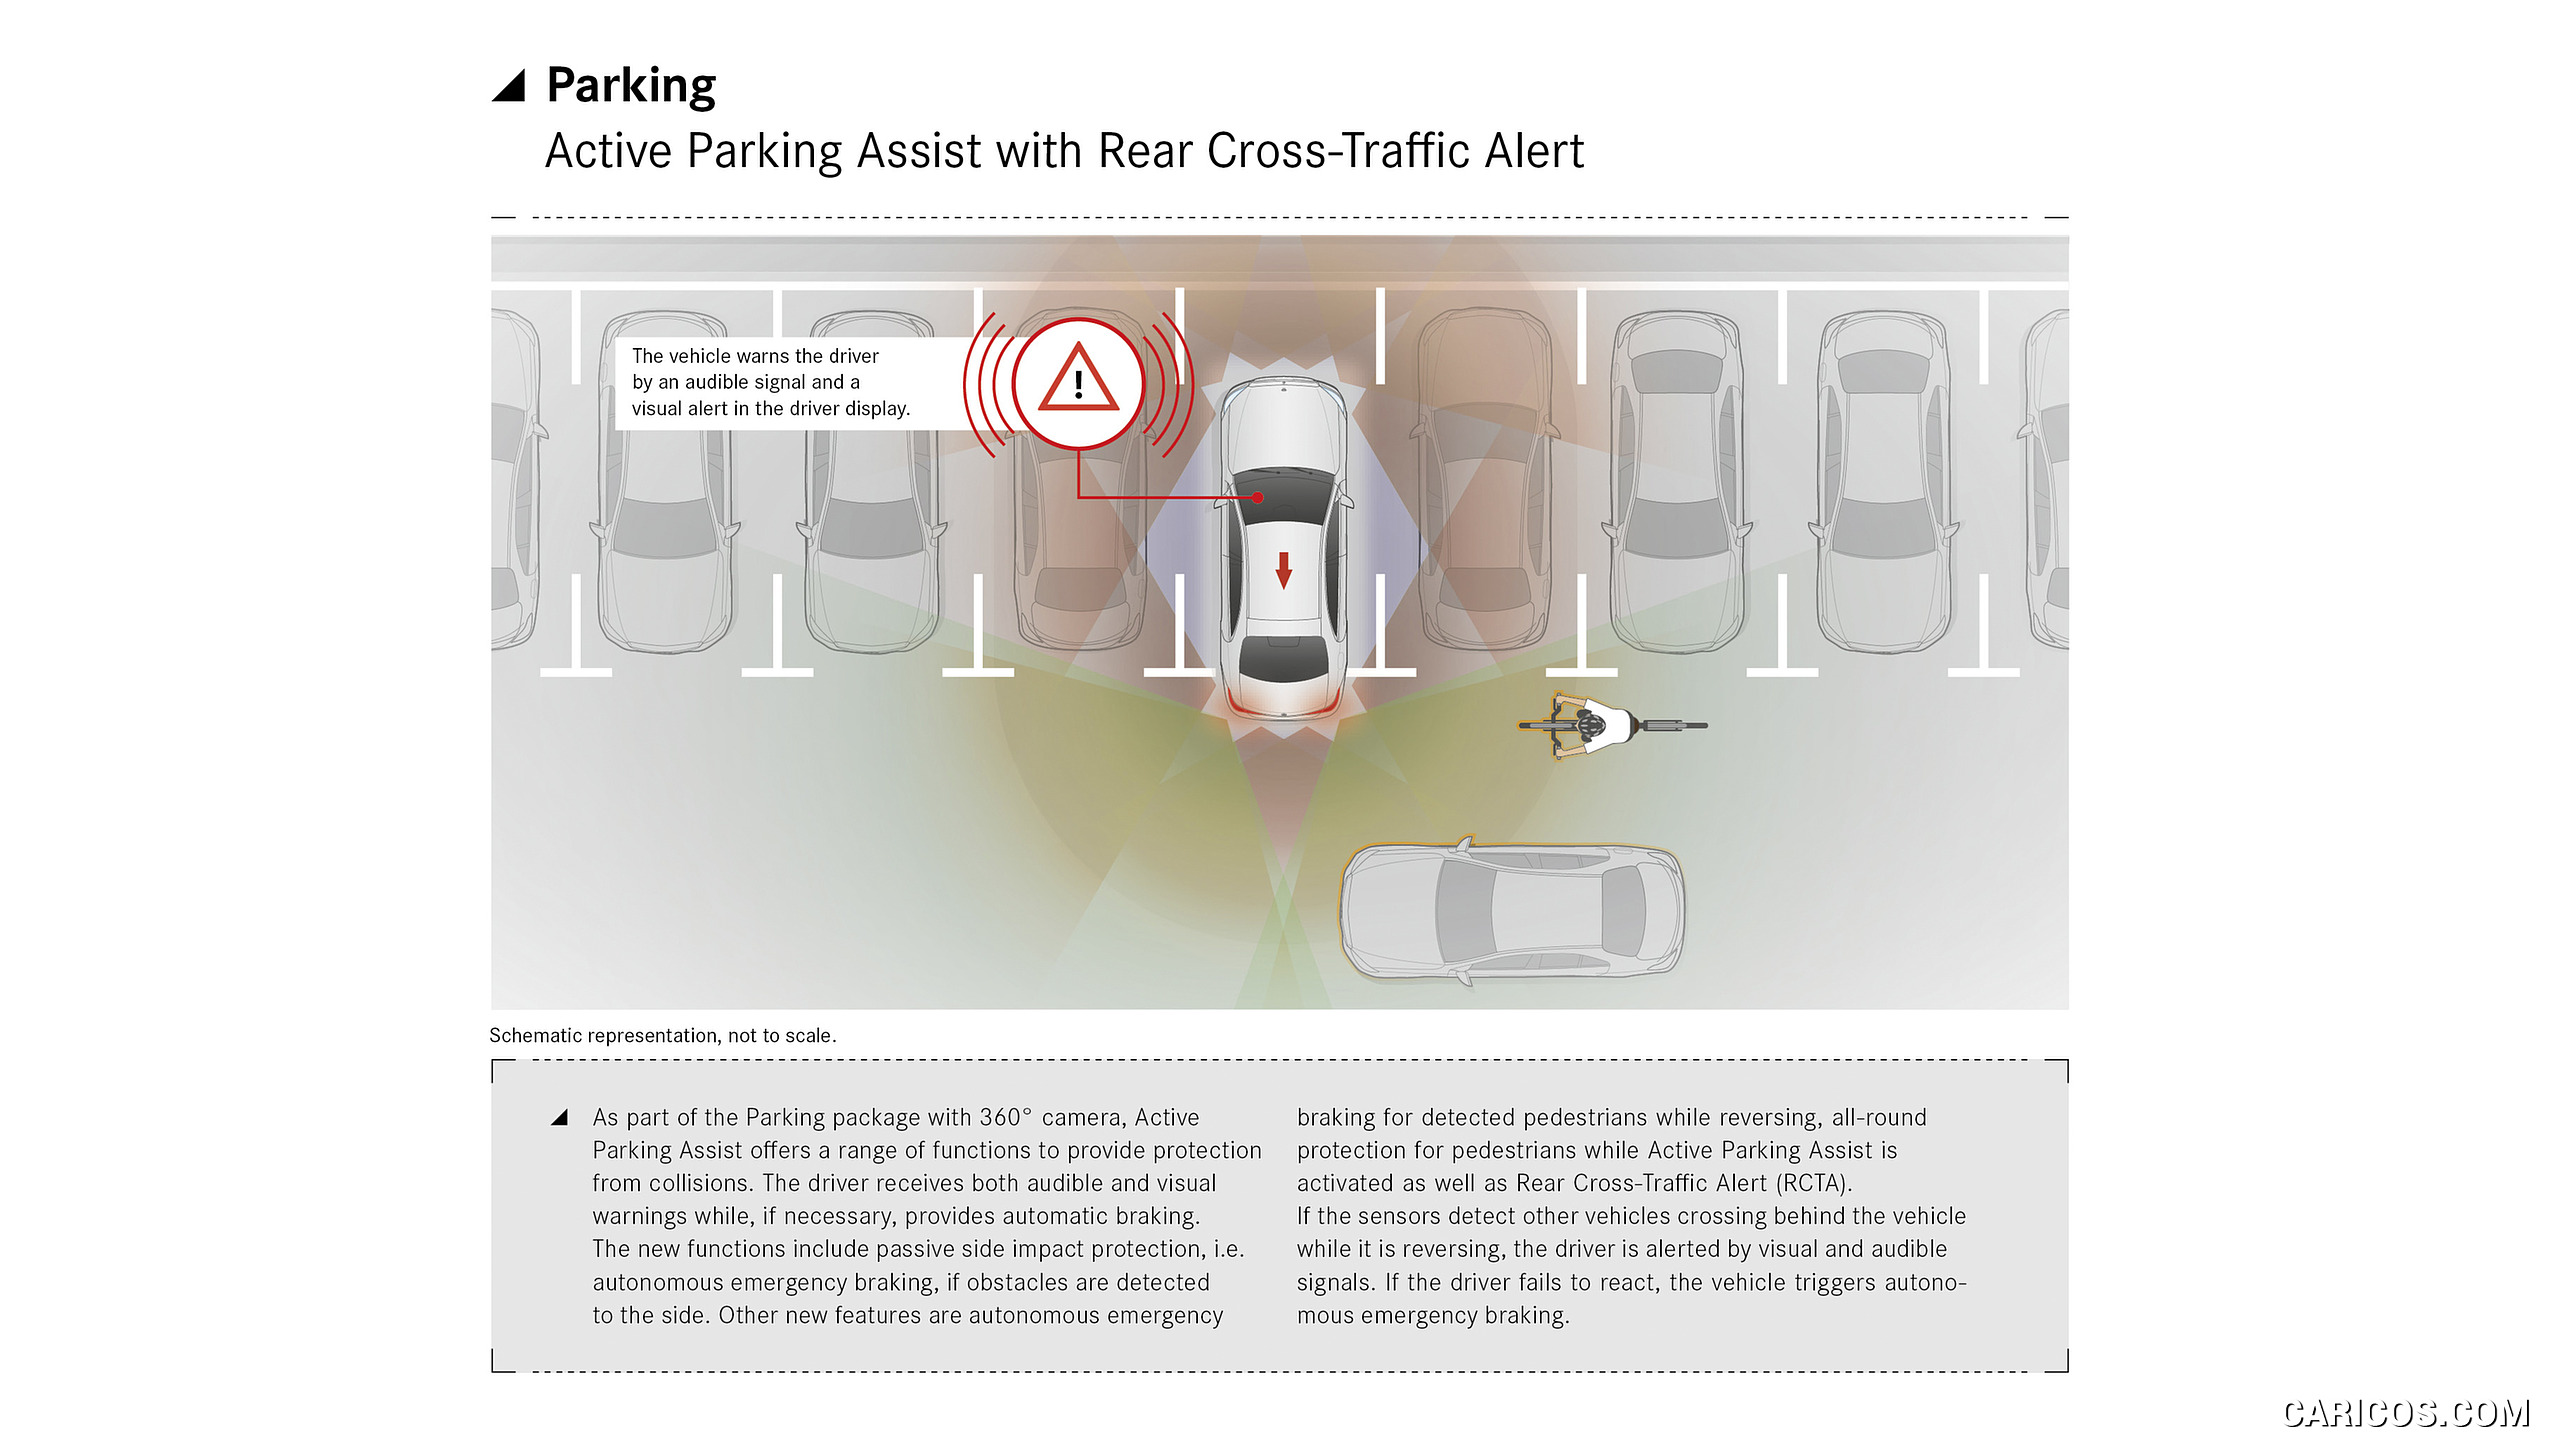 2021 Mercedes-Benz S-Class - Parking assistance: Active Parking Assist with Rear Cross-Traffic Alert, #212 of 316